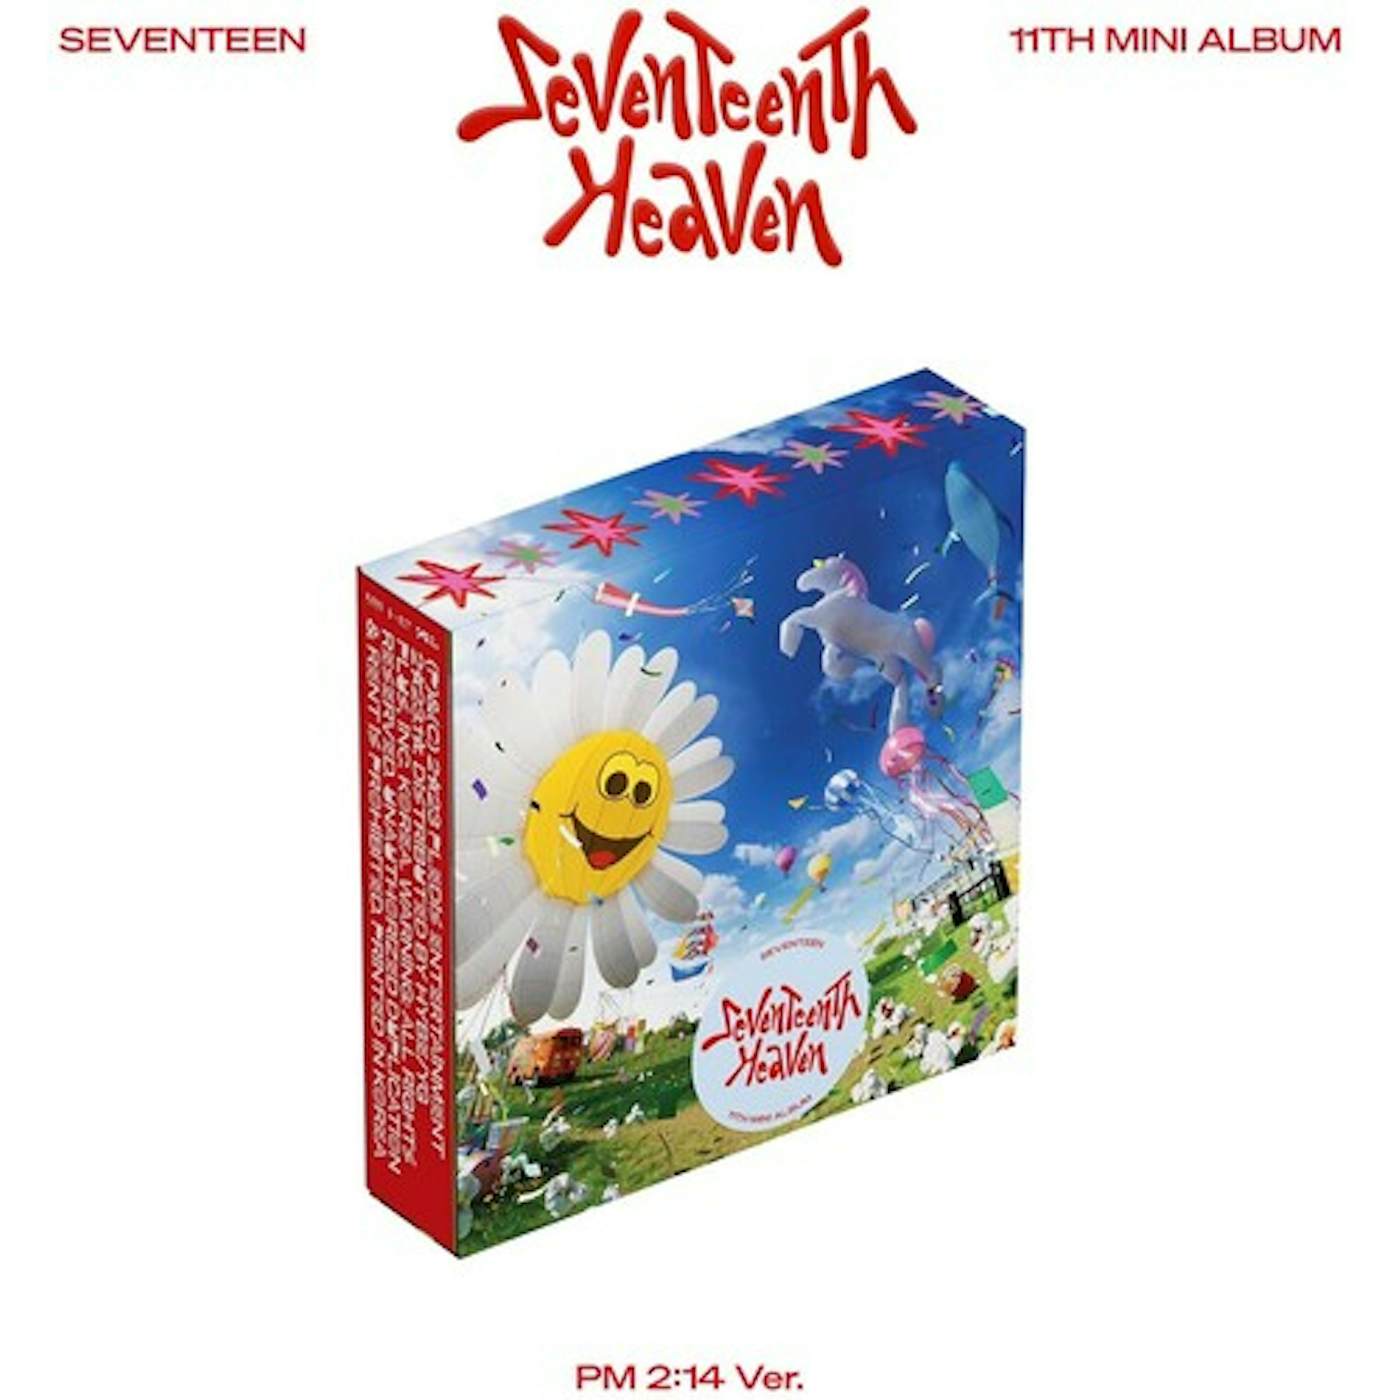 11TH MINI ALBUM 'SEVENTEENTH HEAVEN' PM 2:14 VER. CD